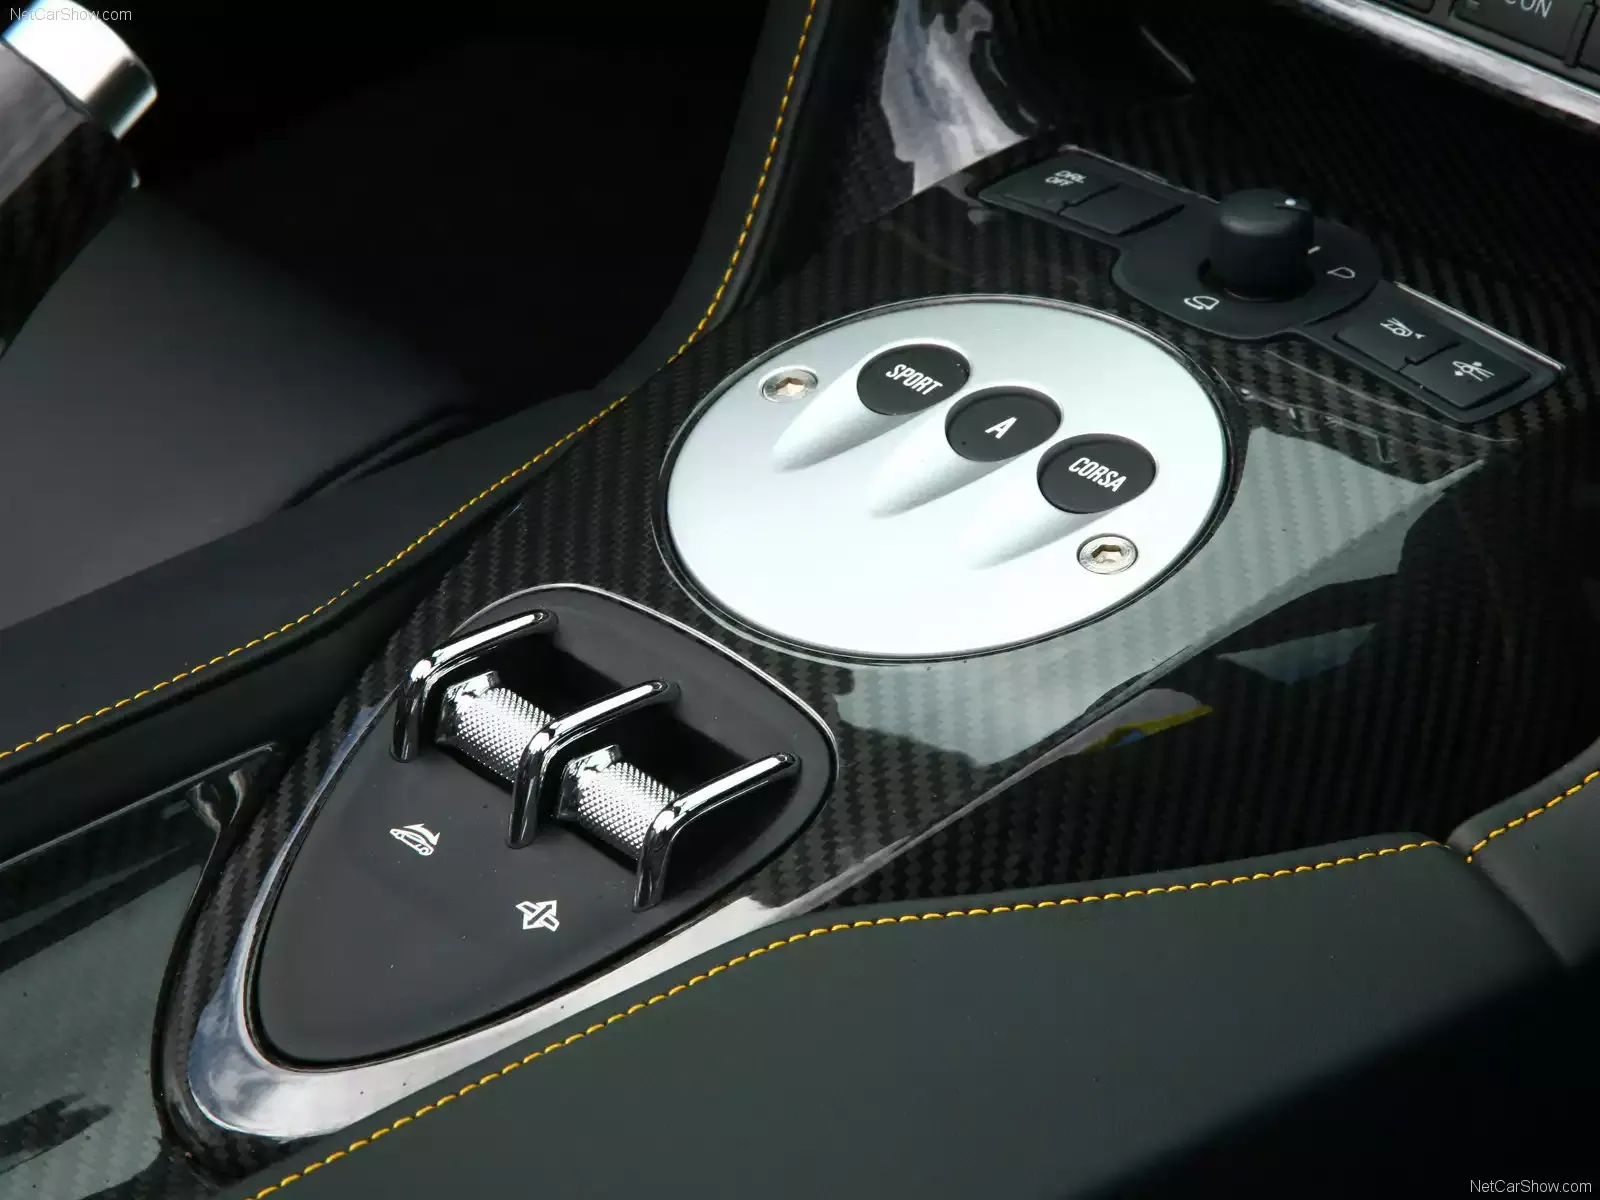 Hình ảnh siêu xe Lamborghini Gallardo LP560-4 Spyder 2009 & nội ngoại thất